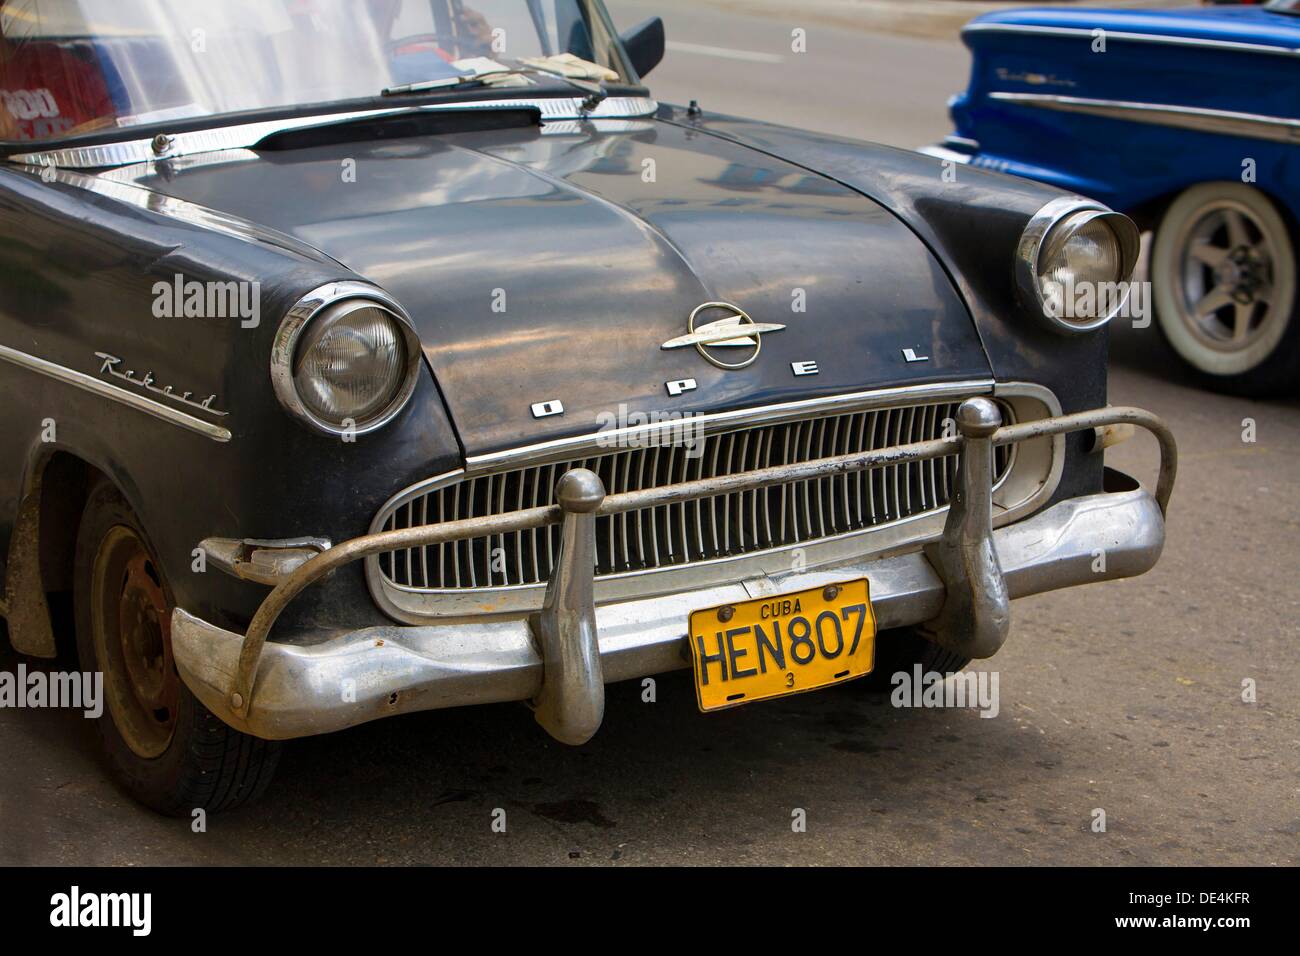 Cuba, Havana, Antique car, Opel Stock Photo